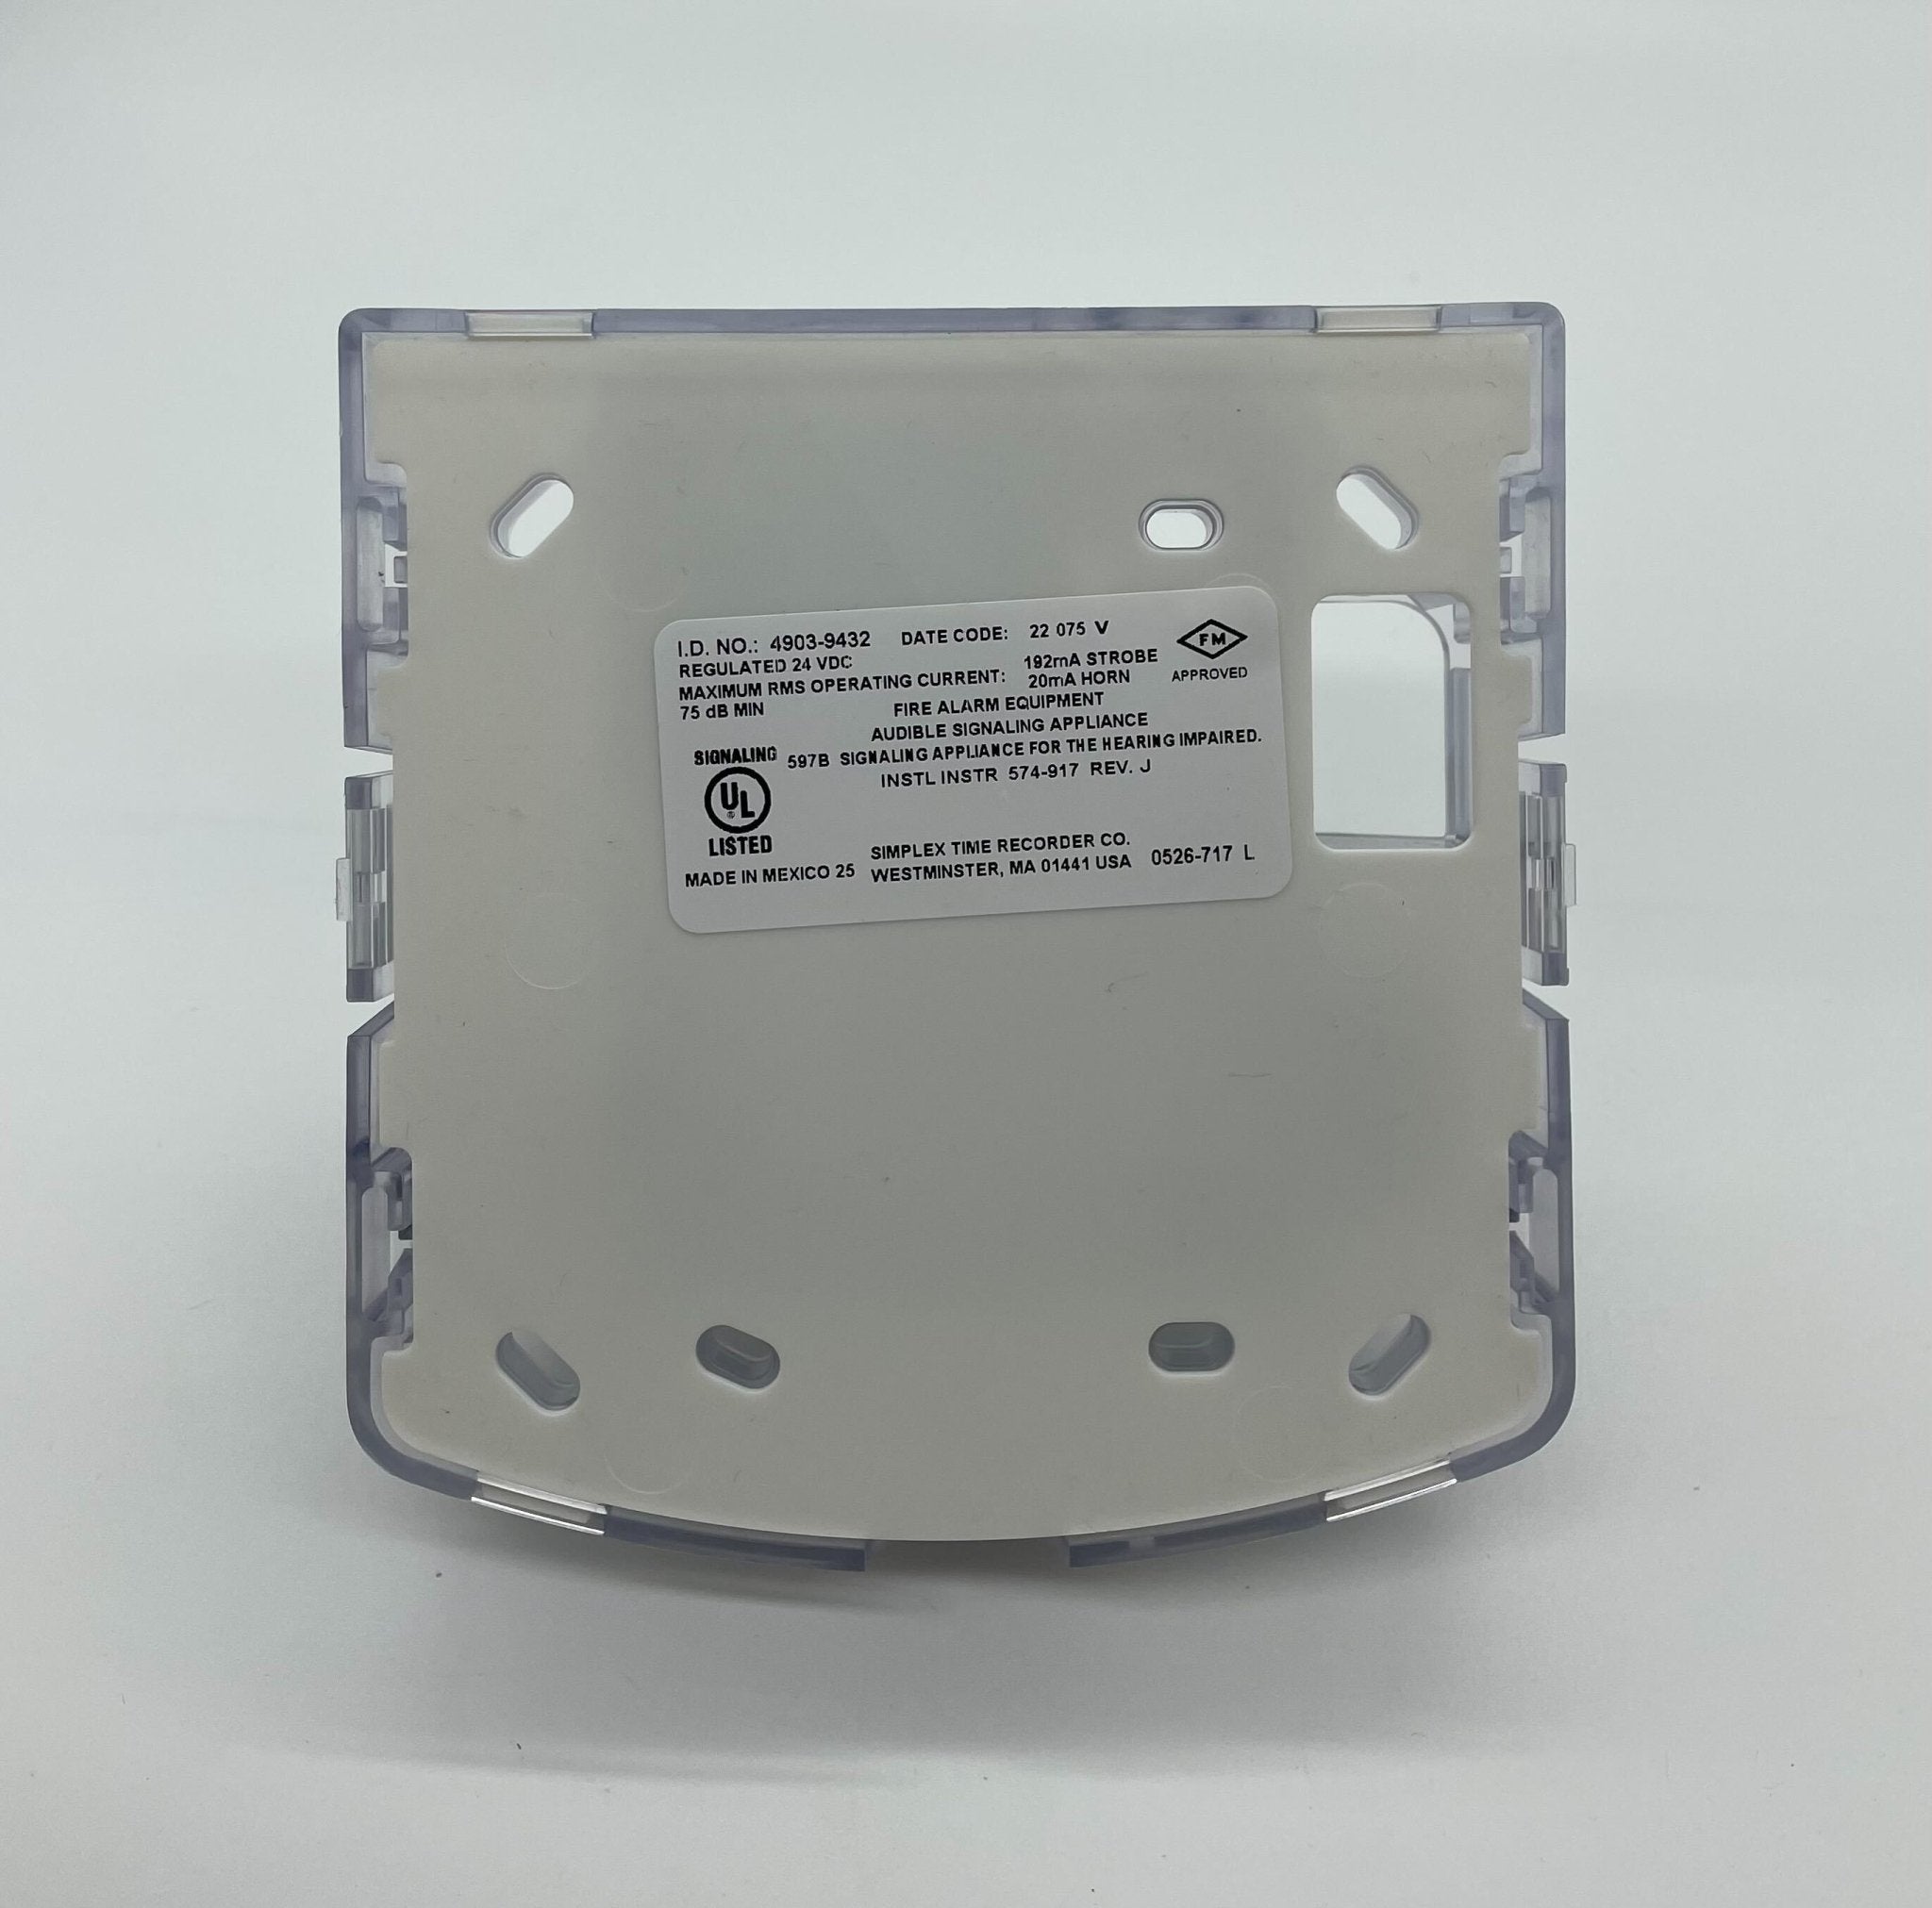 Simplex 4903-9432 | 75CD White Std Non-Adress - The Fire Alarm Supplier